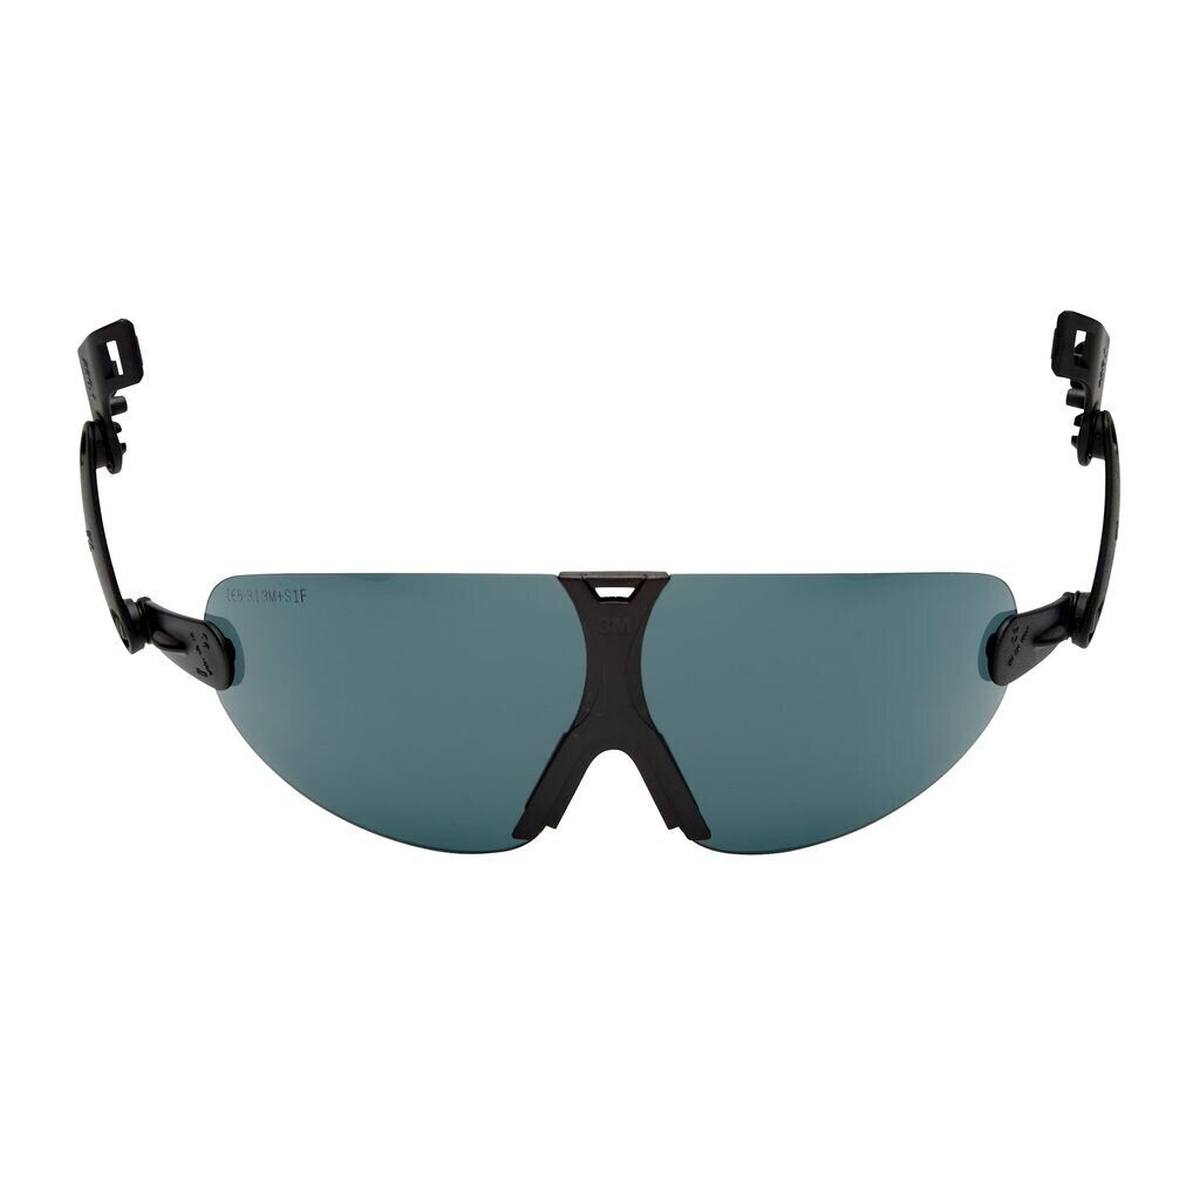 3M Integreerbare veiligheidsbril voor veiligheidshelm, grijs, V9G